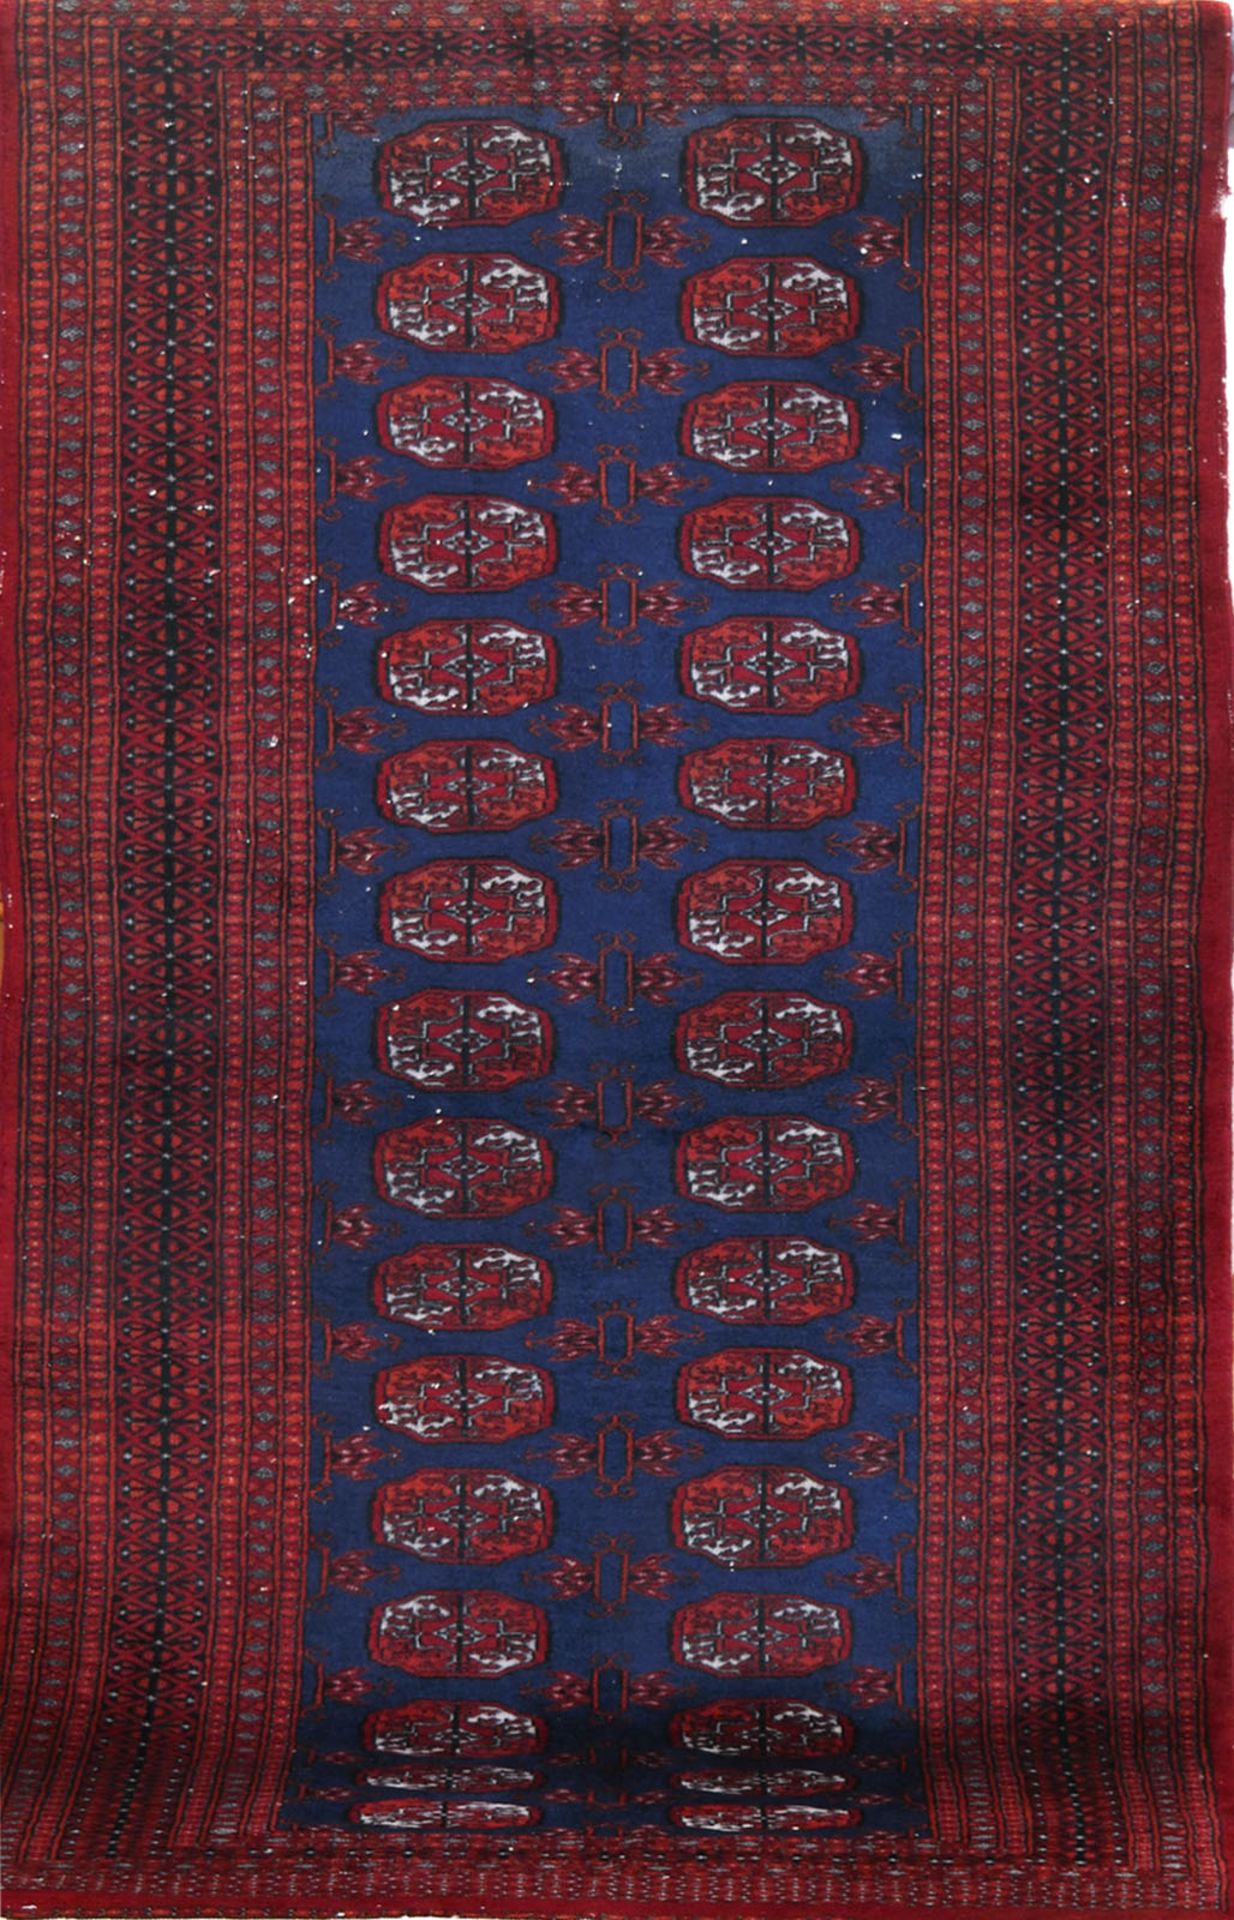 Buchara, rot/blaugrundig mit ornamentalem Muster, Kanten beschädigt, belaufen, 187x100 cm